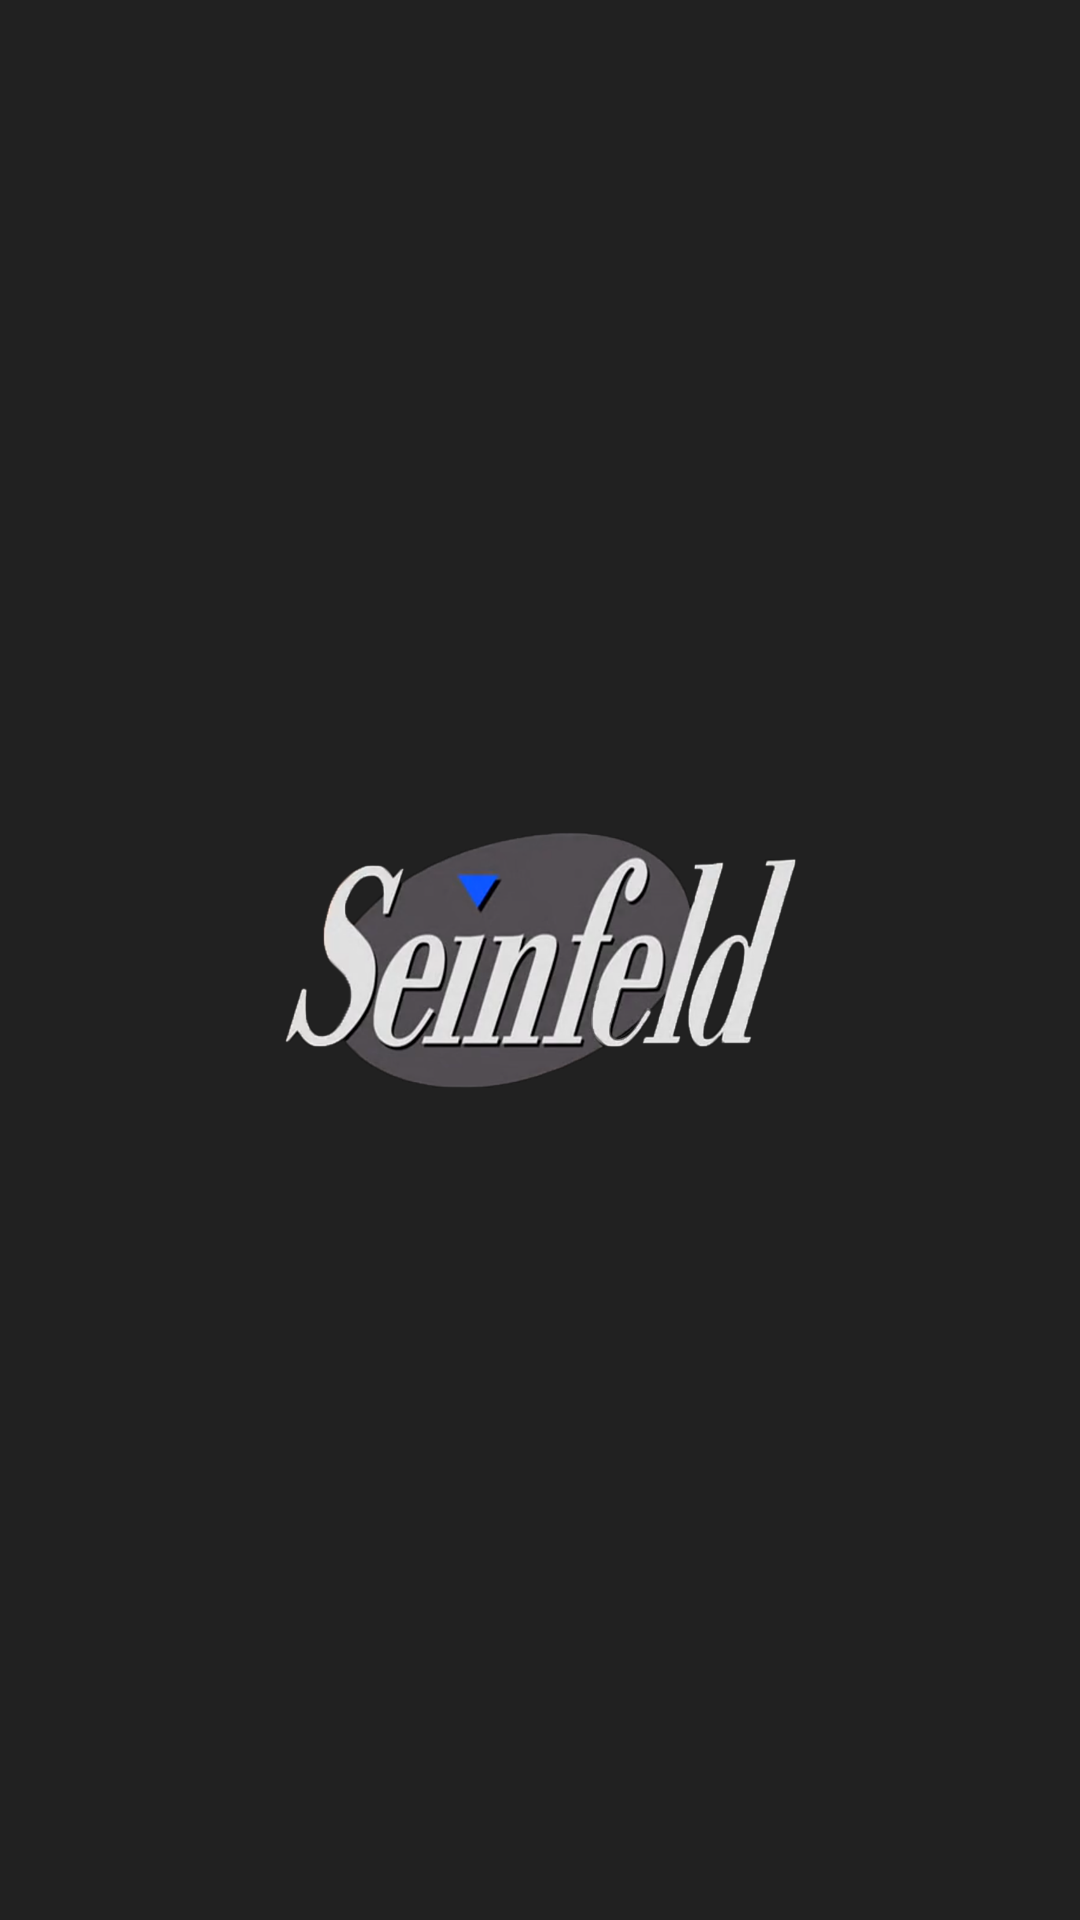 Seinfeld season 5 logo simple iphone wallpaper